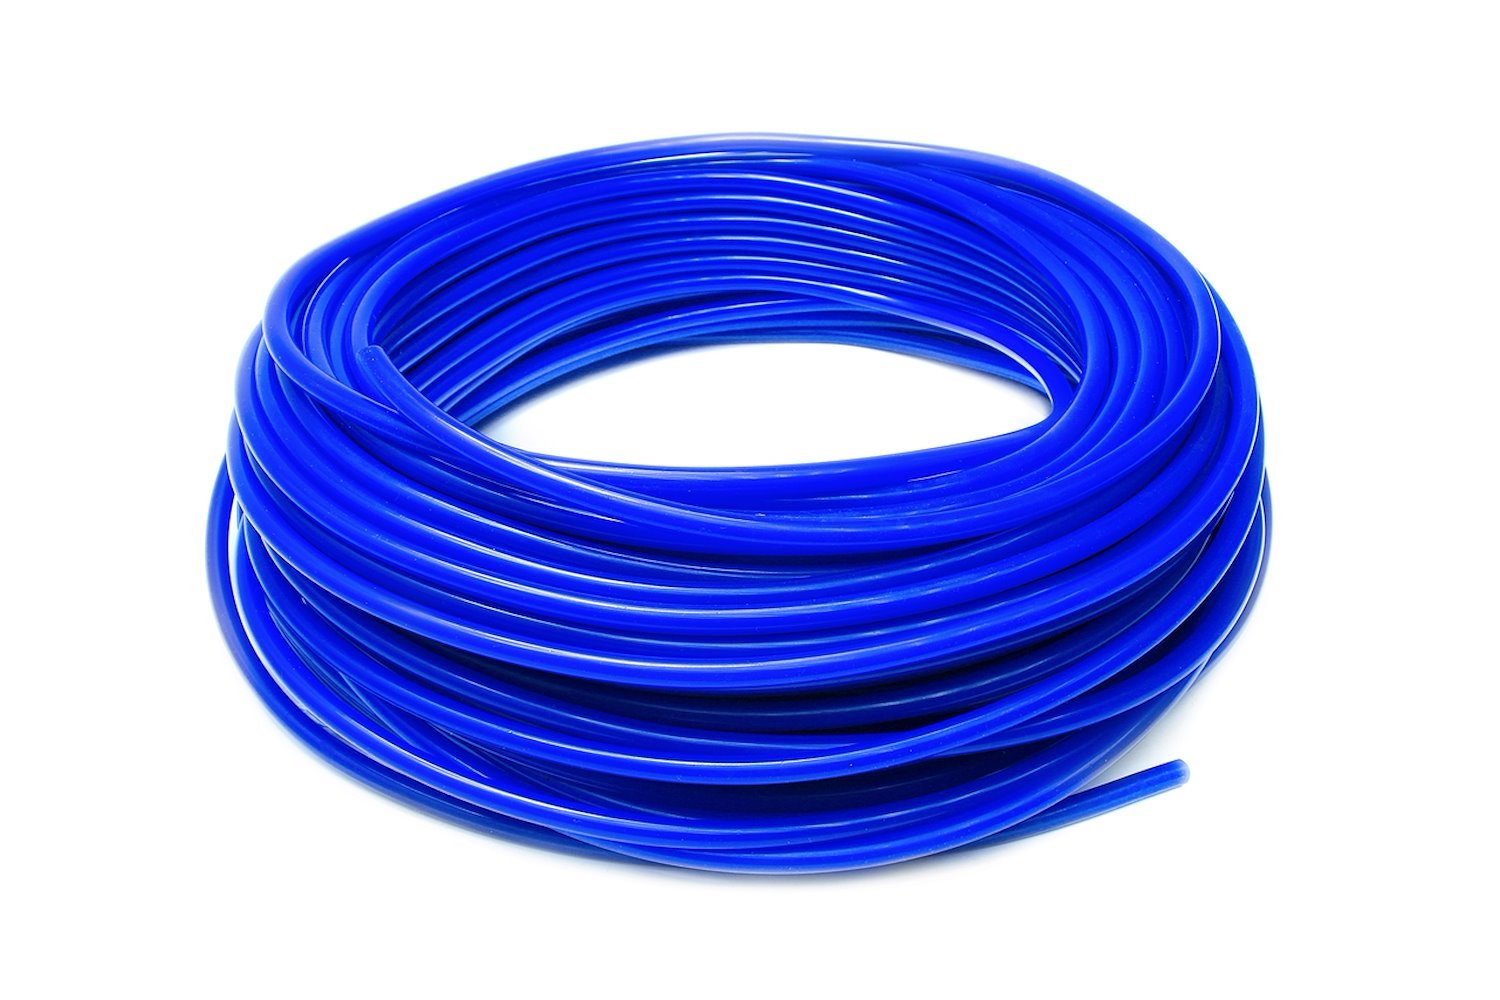 HTSVH8-BLUEx100 High-Temperature Silicone Vacuum Hose Tubing, 5/16 in. ID, 100 ft. Roll, Blue